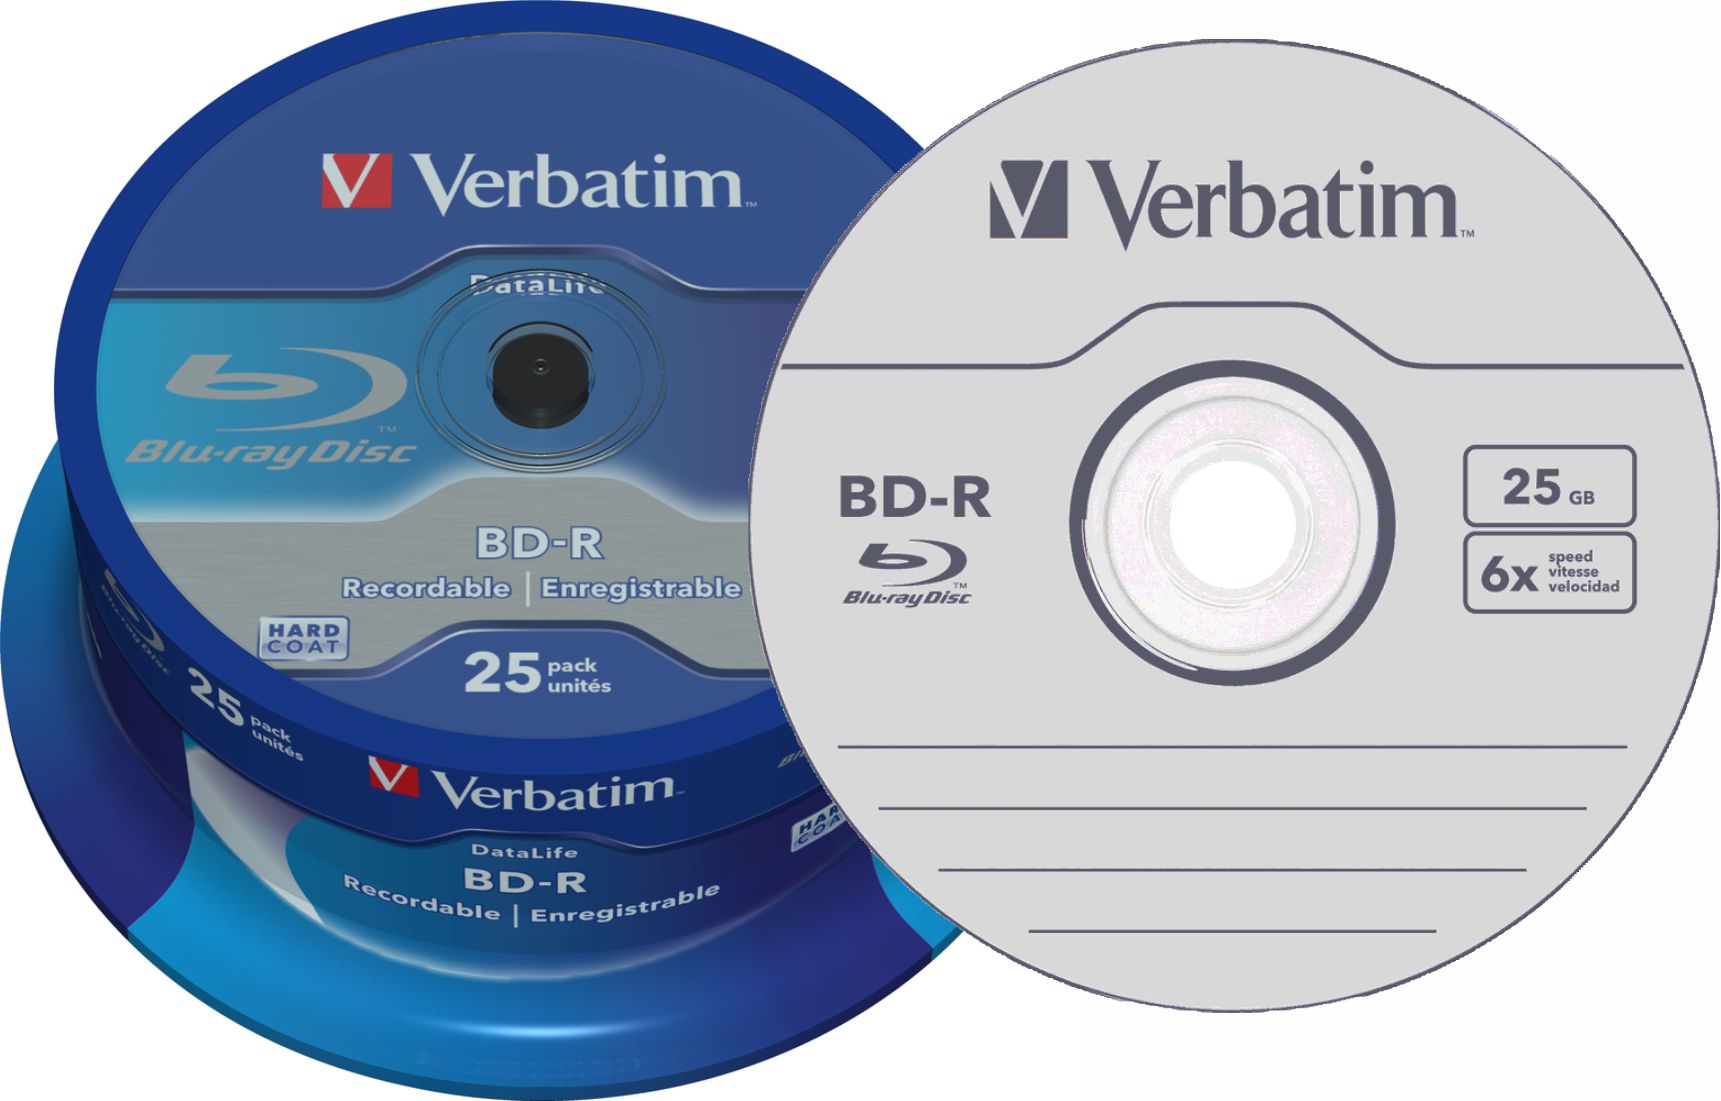 Cd blu. Диск Blu ray cd25 GB. Verbatim Blu-ray диск bd-re DL 50 ГБ 2x BDRE. Blu ray 25 GB. Blu-ray (Blu-ray Disc).